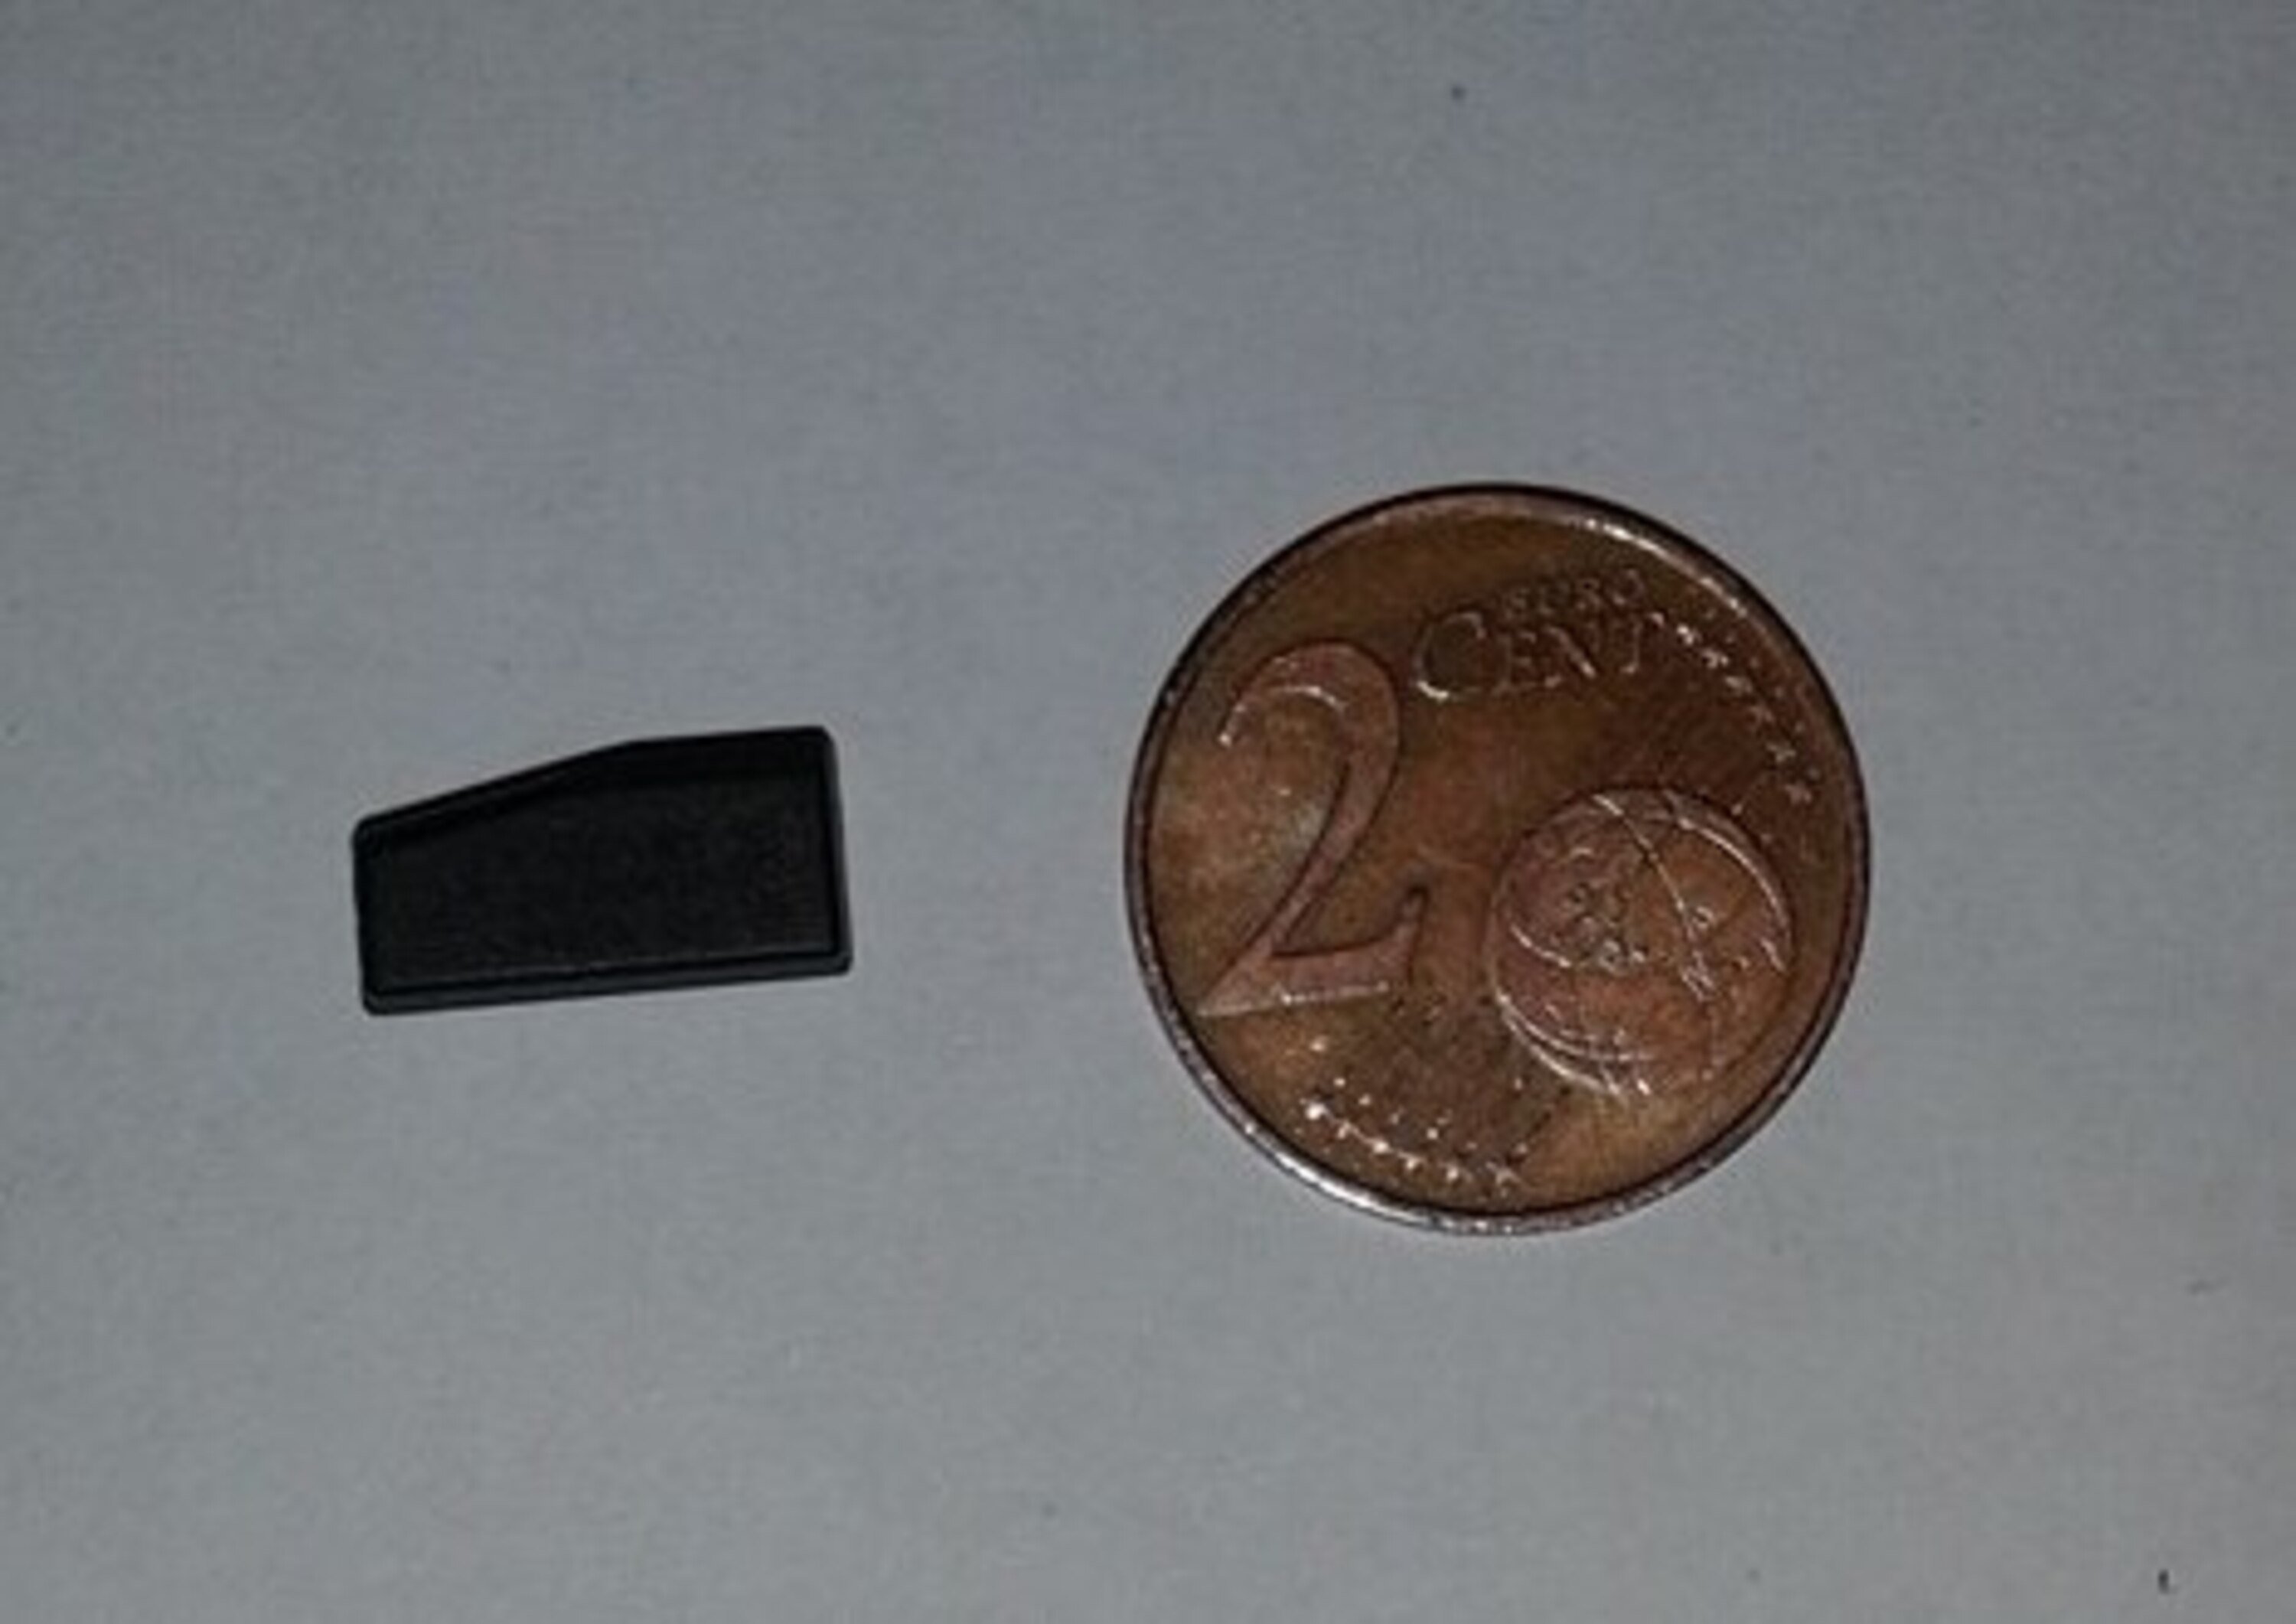 Il chip da 2 mm che mette KO i moderni antifurto